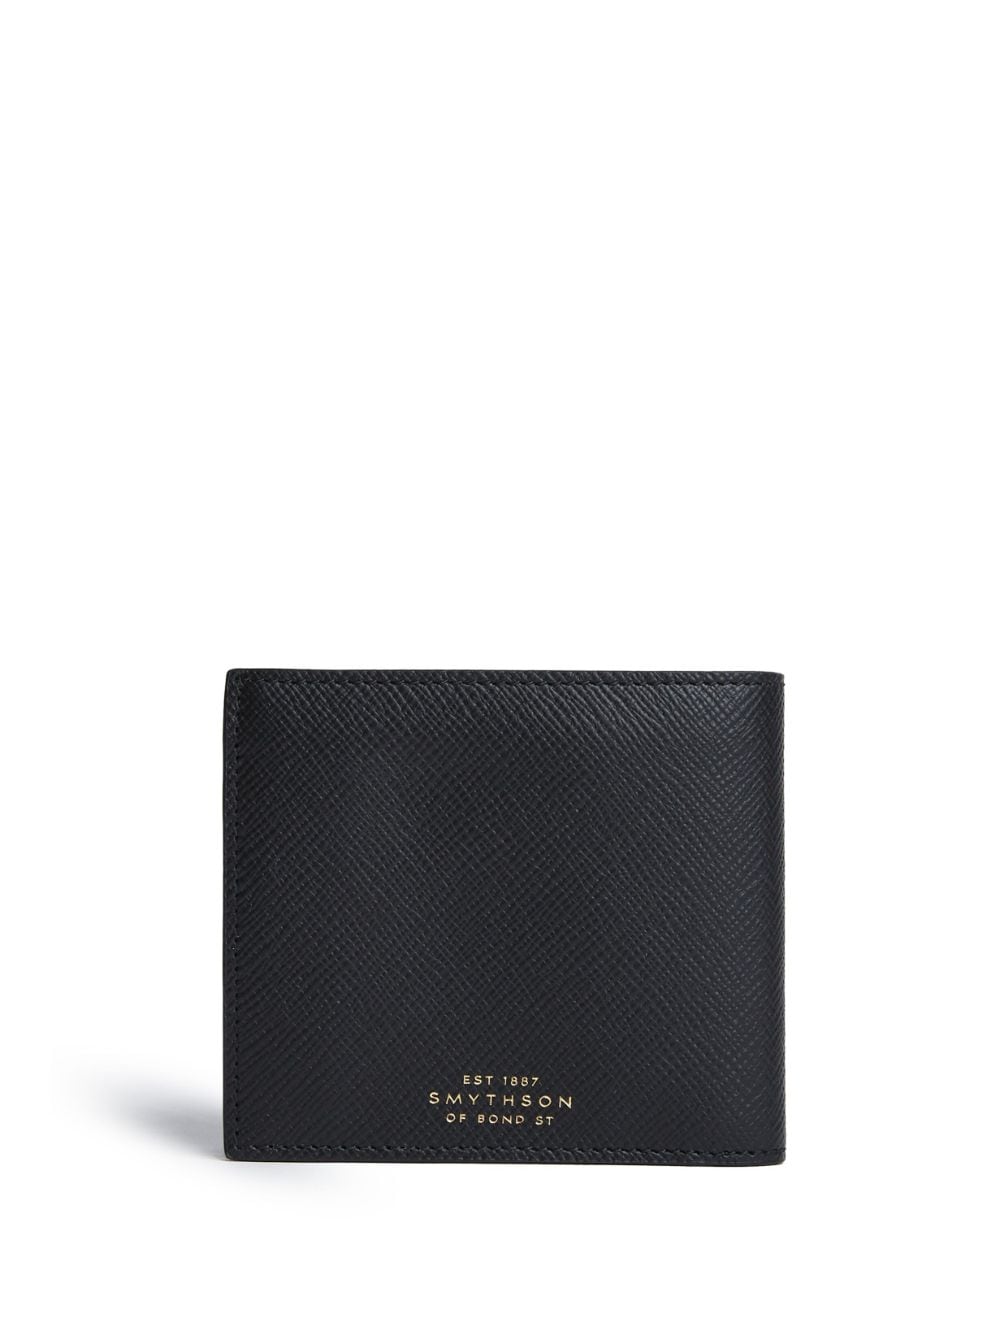 Smythson Panama bi-fold leather wallet - Black von Smythson